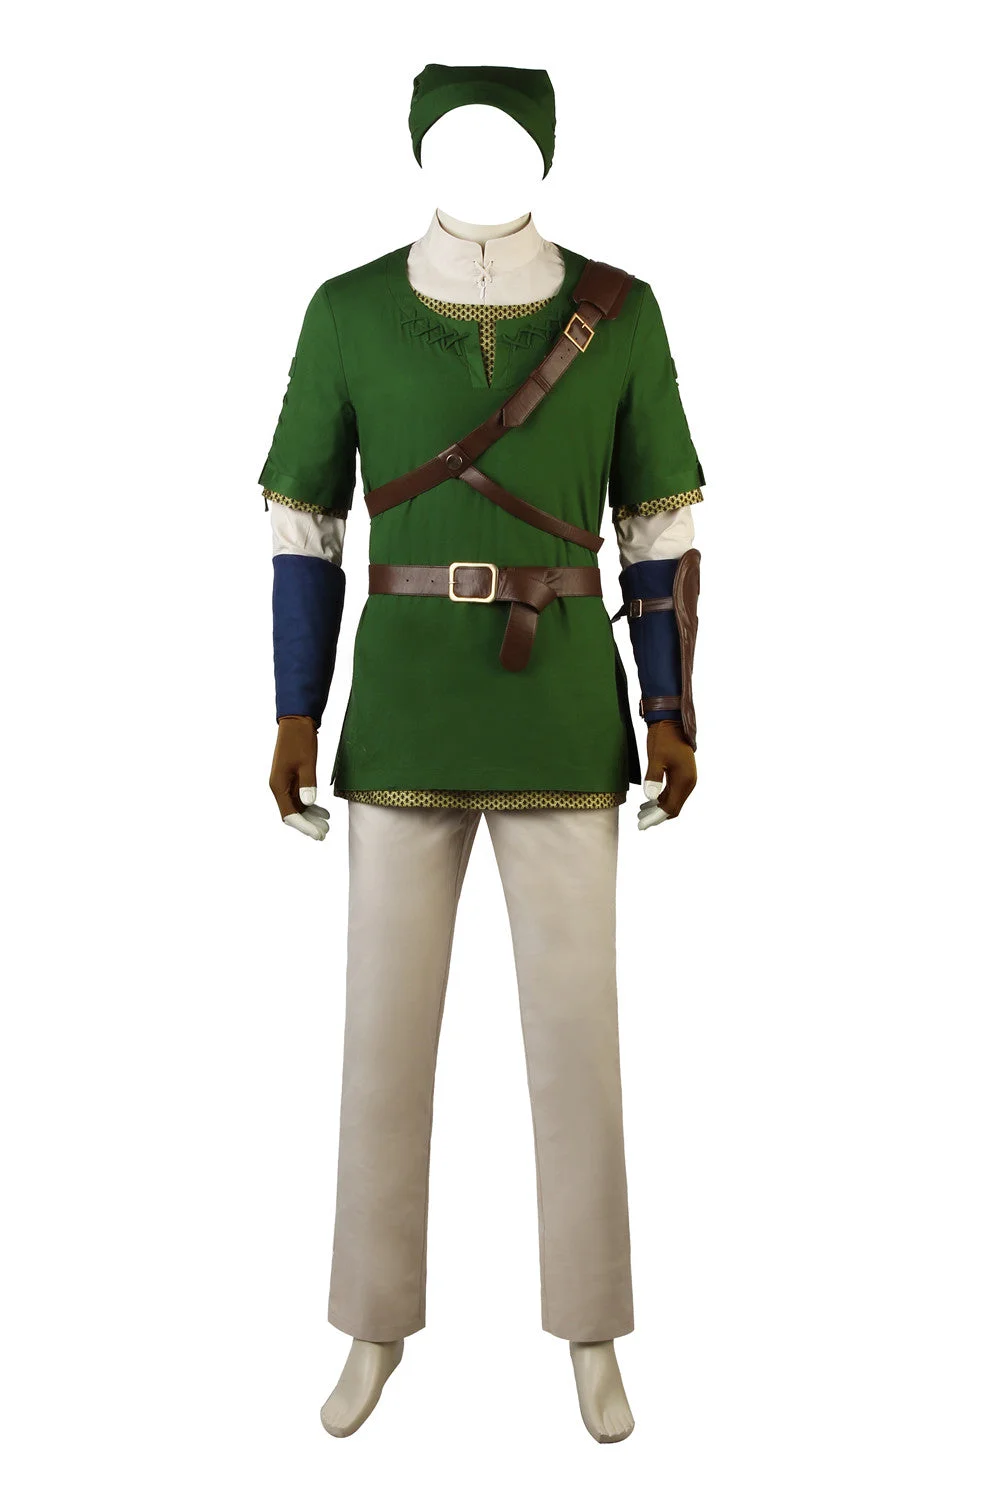 Link Hero Tunic Cosplay Costume The Legend of Zelda: Twilight Princess Version